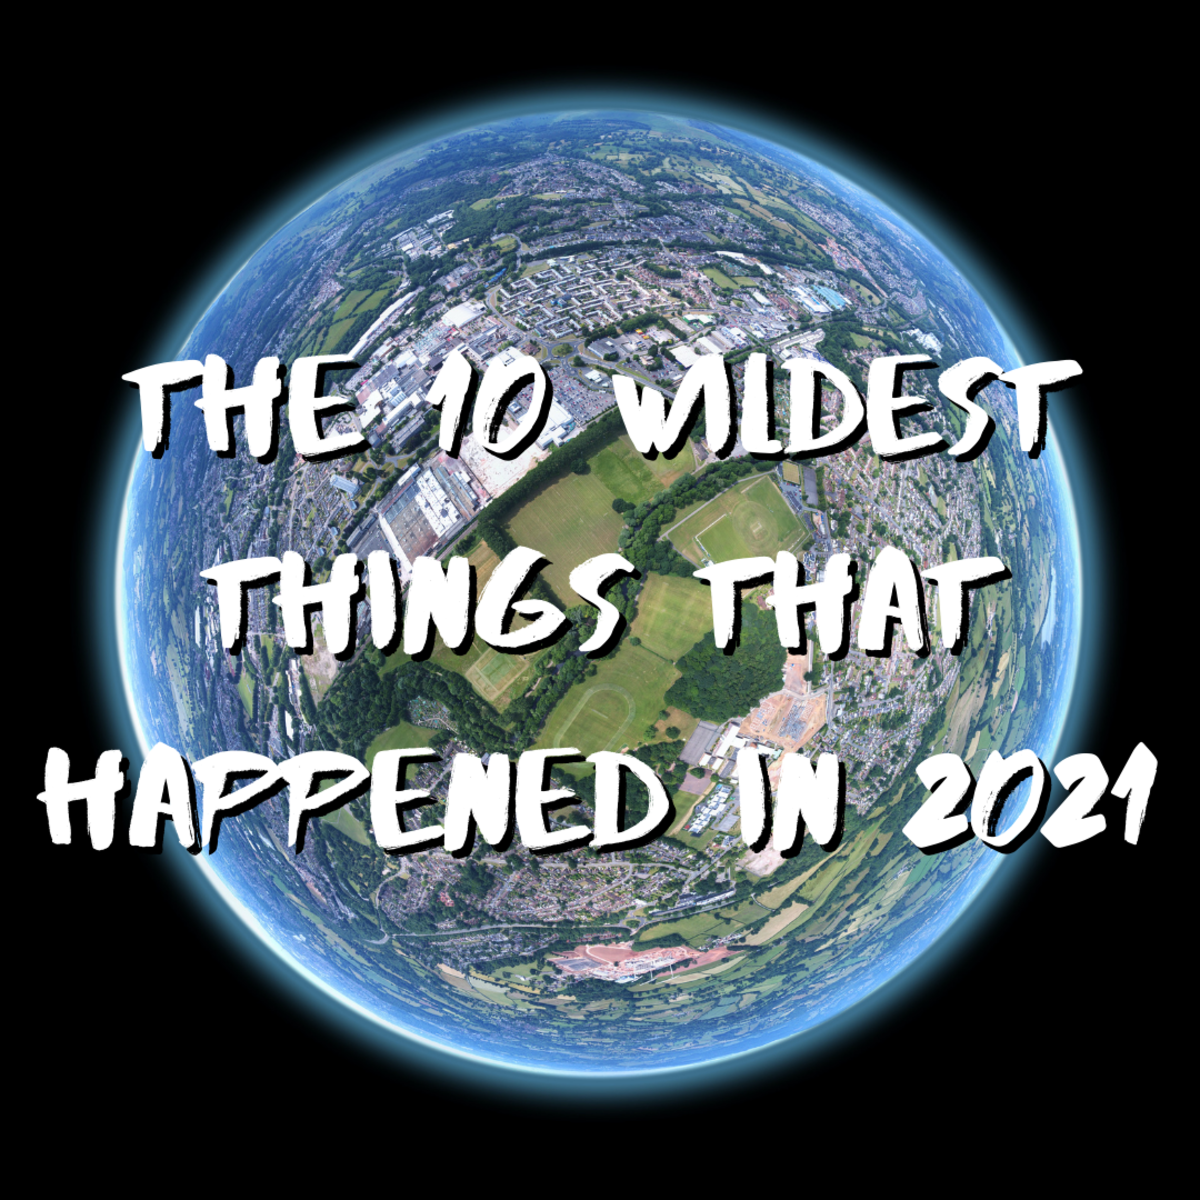 10-wild-things-that-happened-in